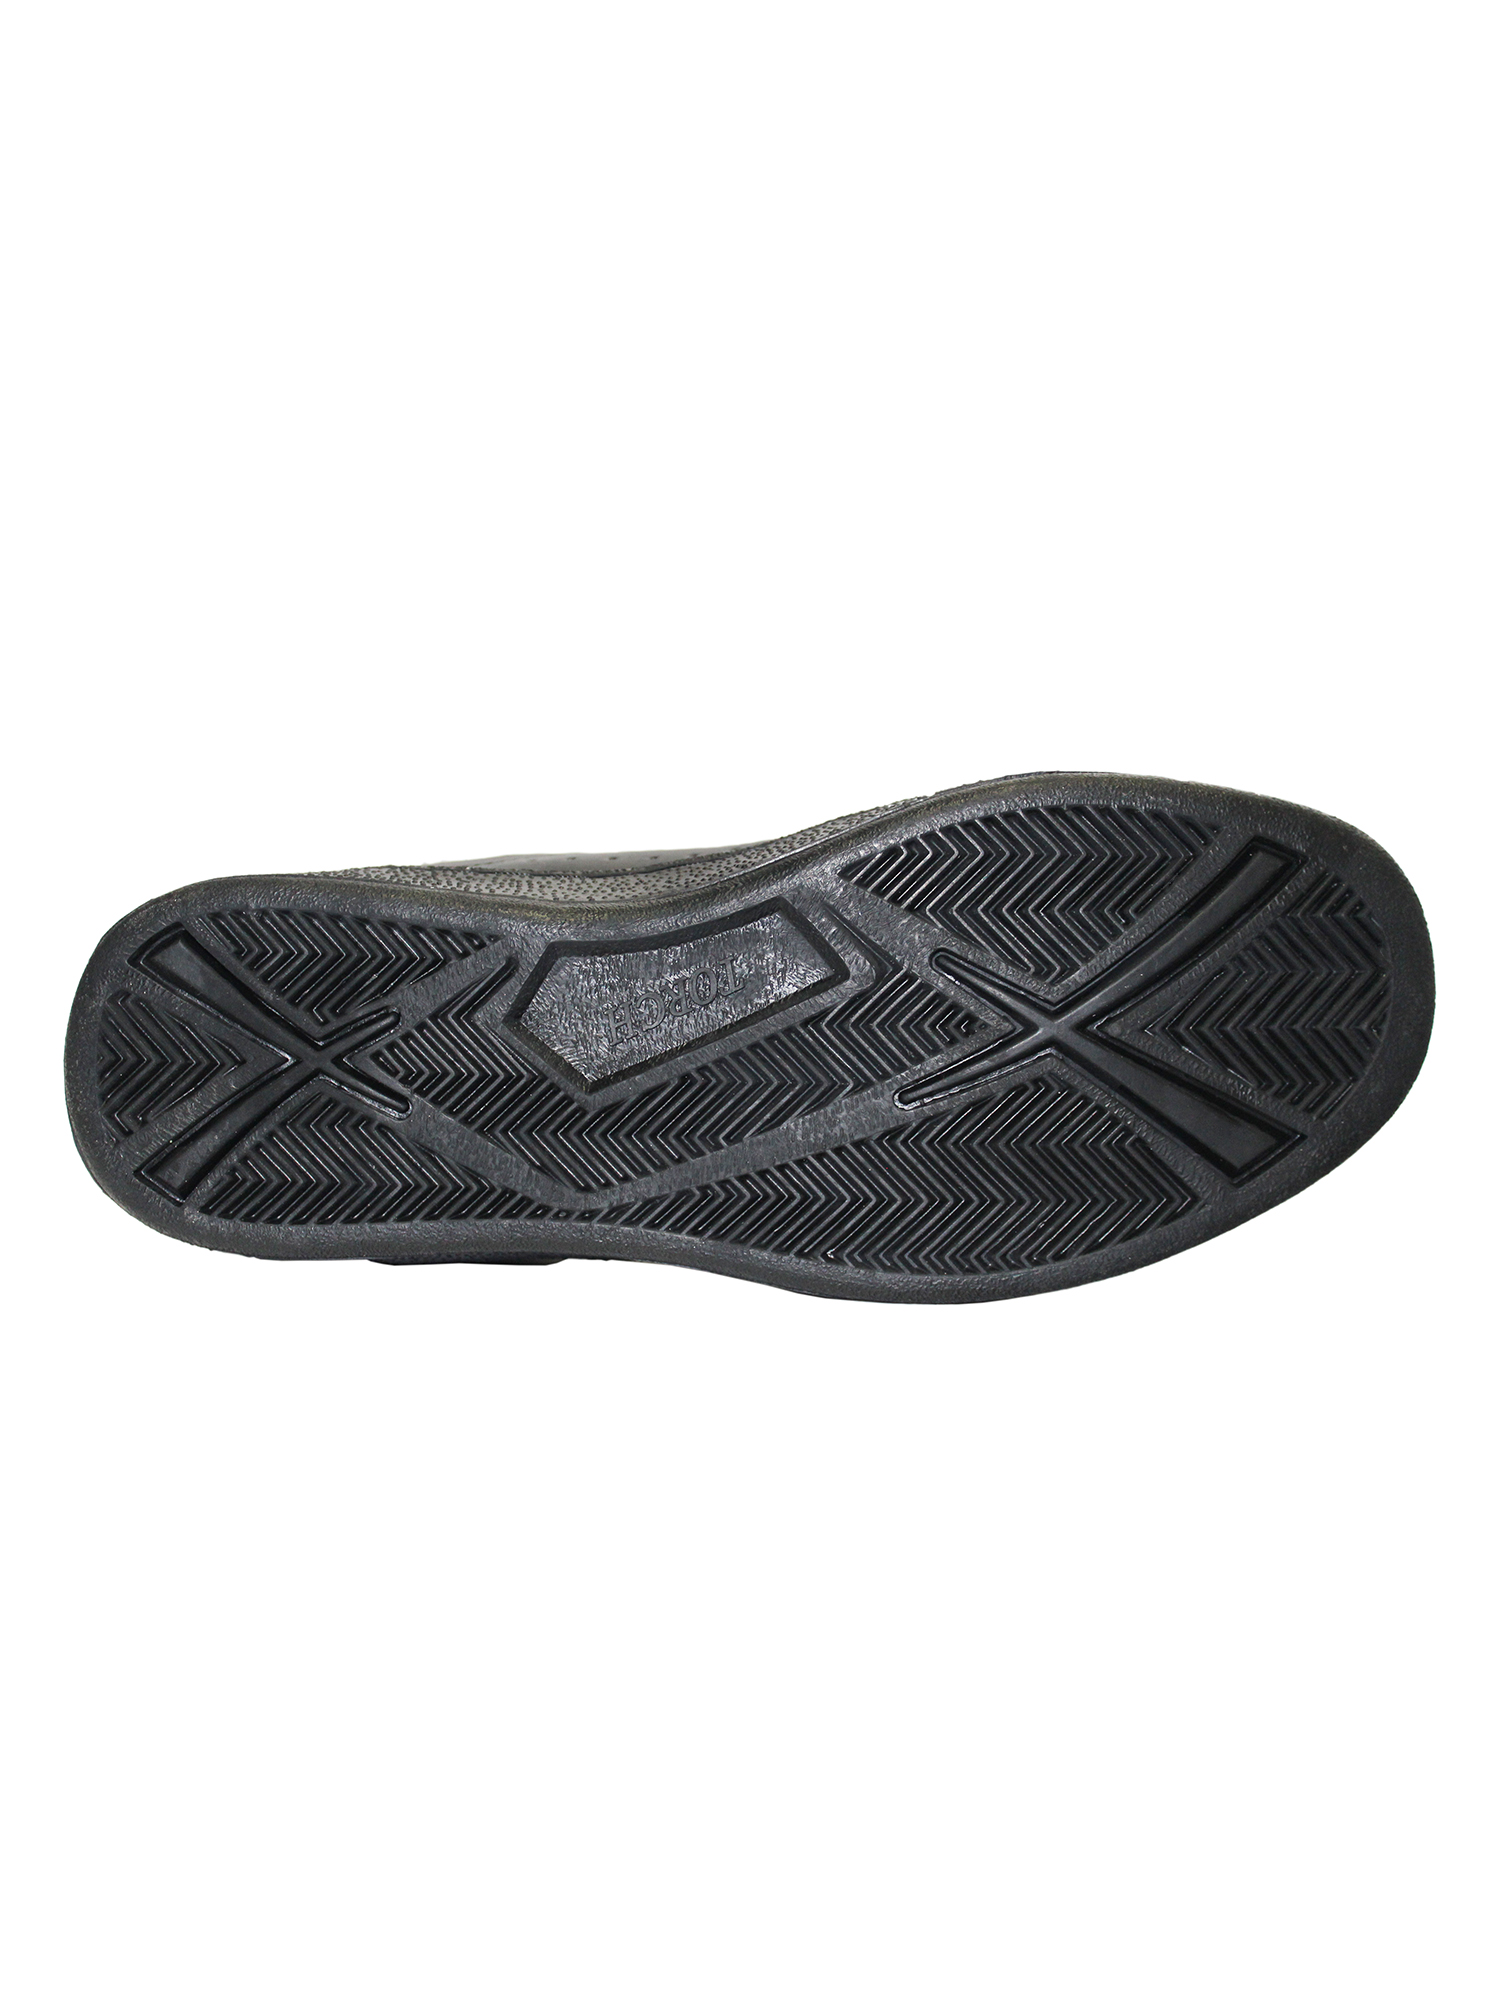 Tanleewa Men's Leather Strap Sneakers Lightweight Hook and Loop Walking Shoe Size 5 Adult Male - image 3 of 4